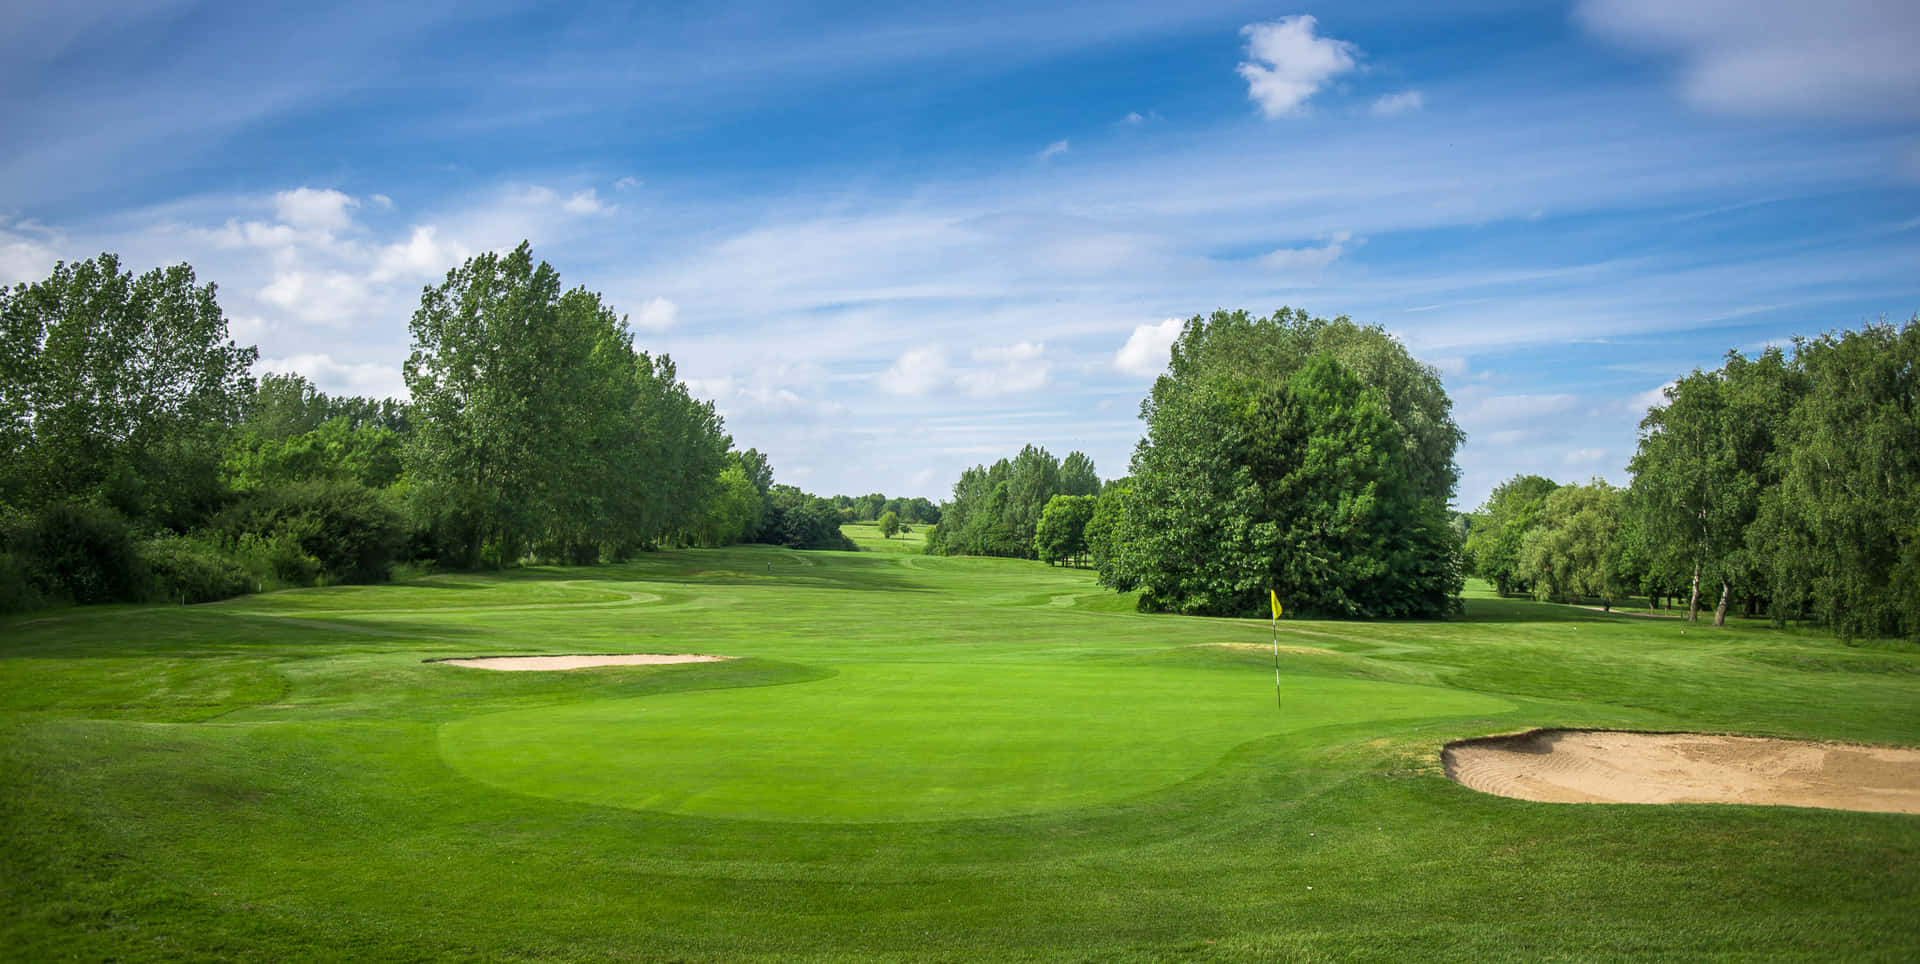 Stunning Golf Course Course Landscape